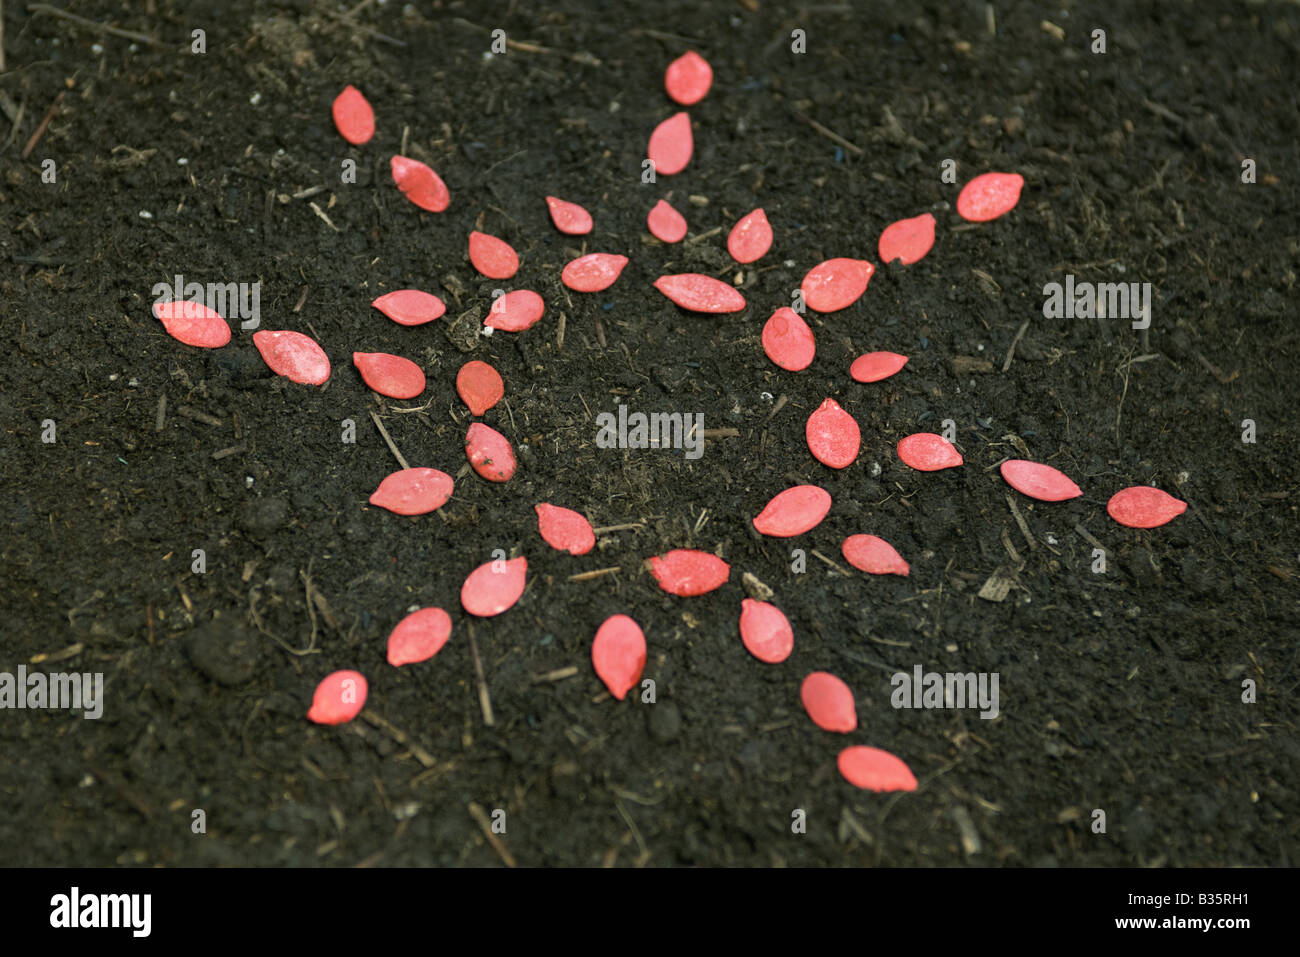 Seeds arranged in design, on soil Stock Photo